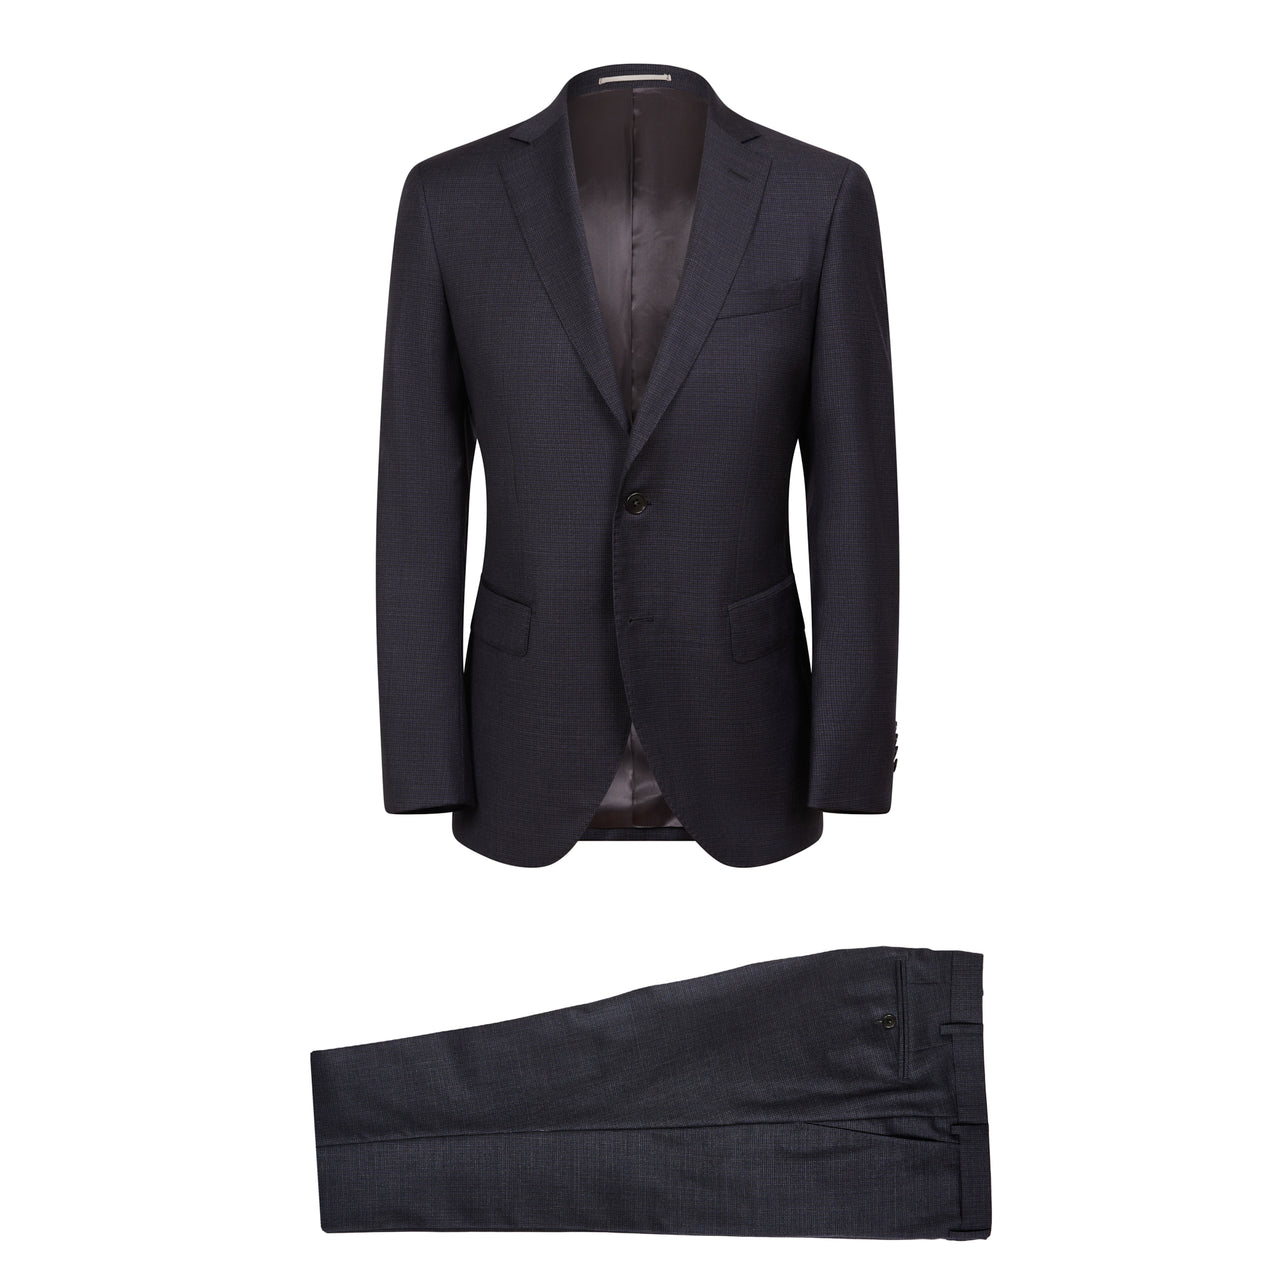 Henry Sartorial Rochdale Suit Charcoal/Cobalt REG